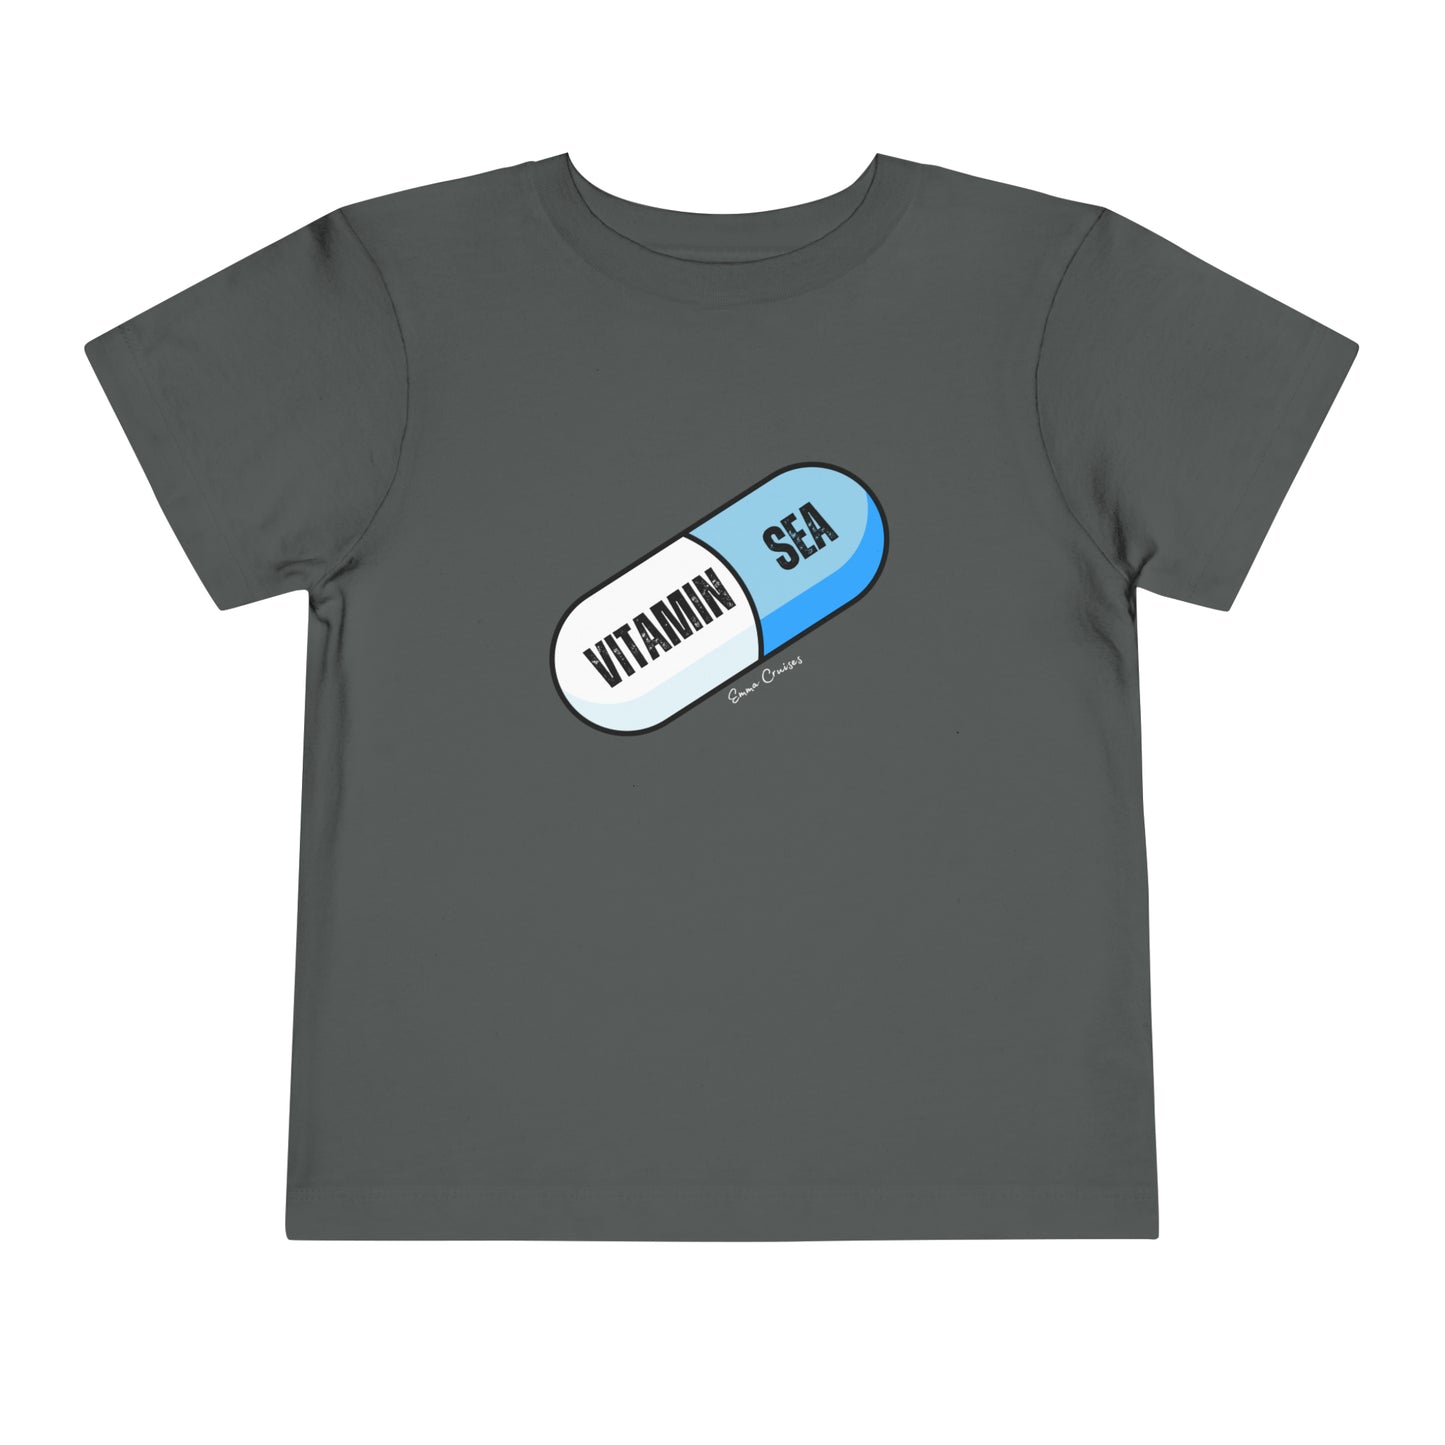 Vitamin Sea - Toddler UNISEX T-Shirt